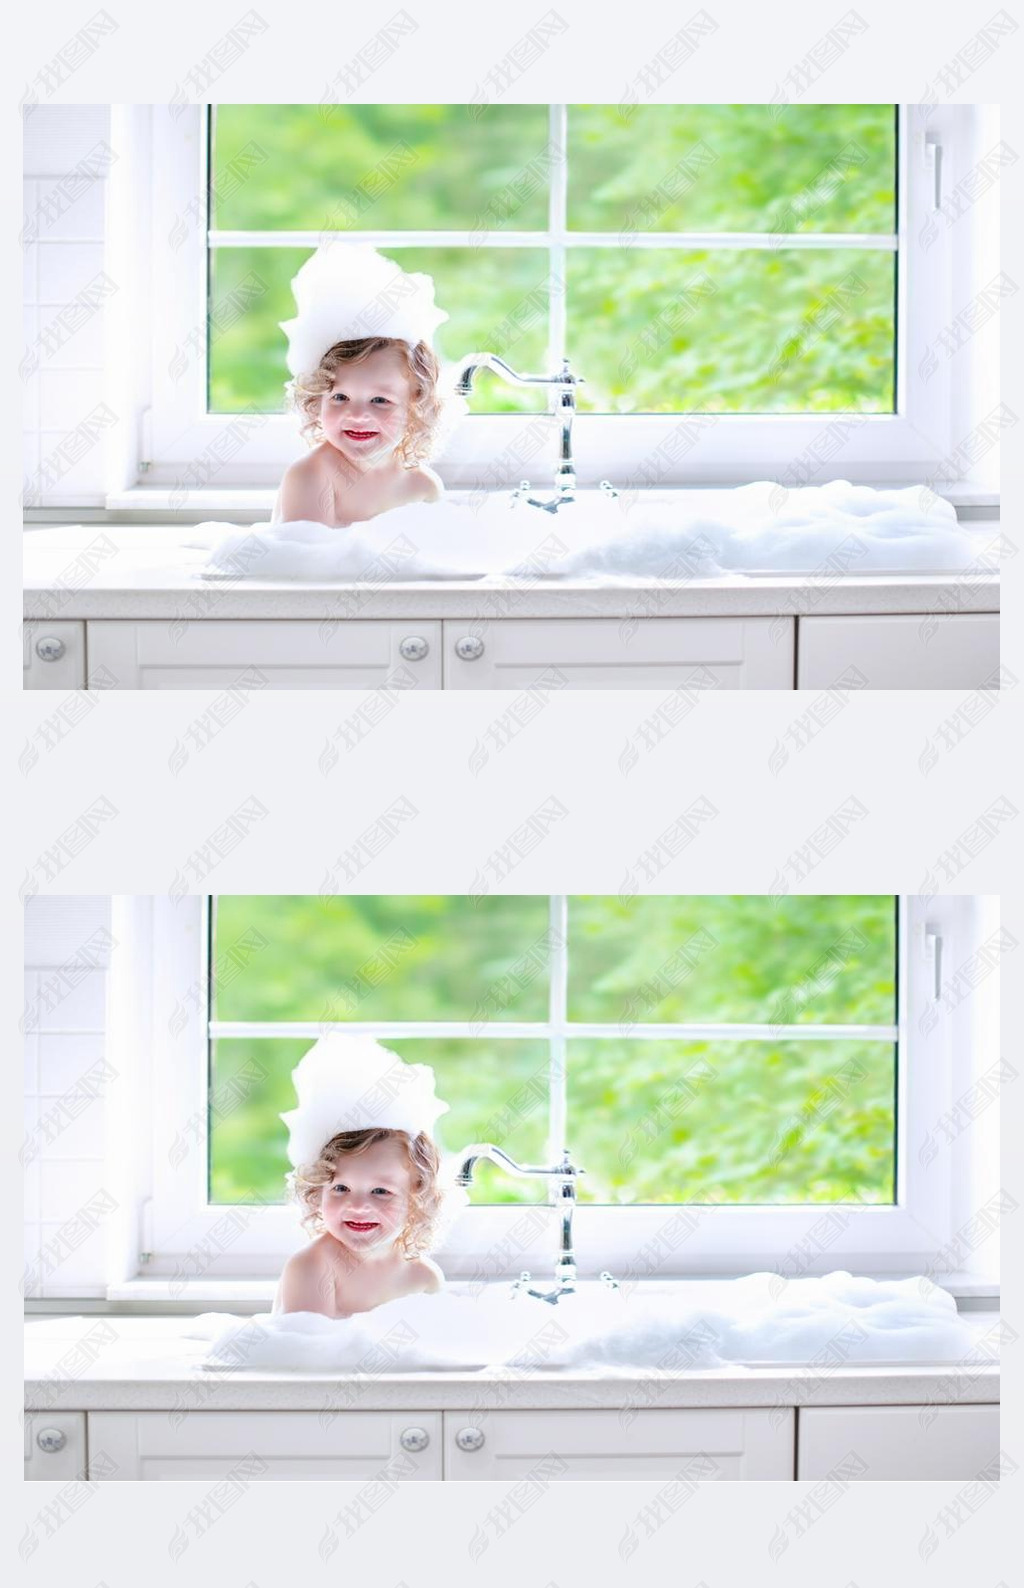 Baby girl taking bath with foam